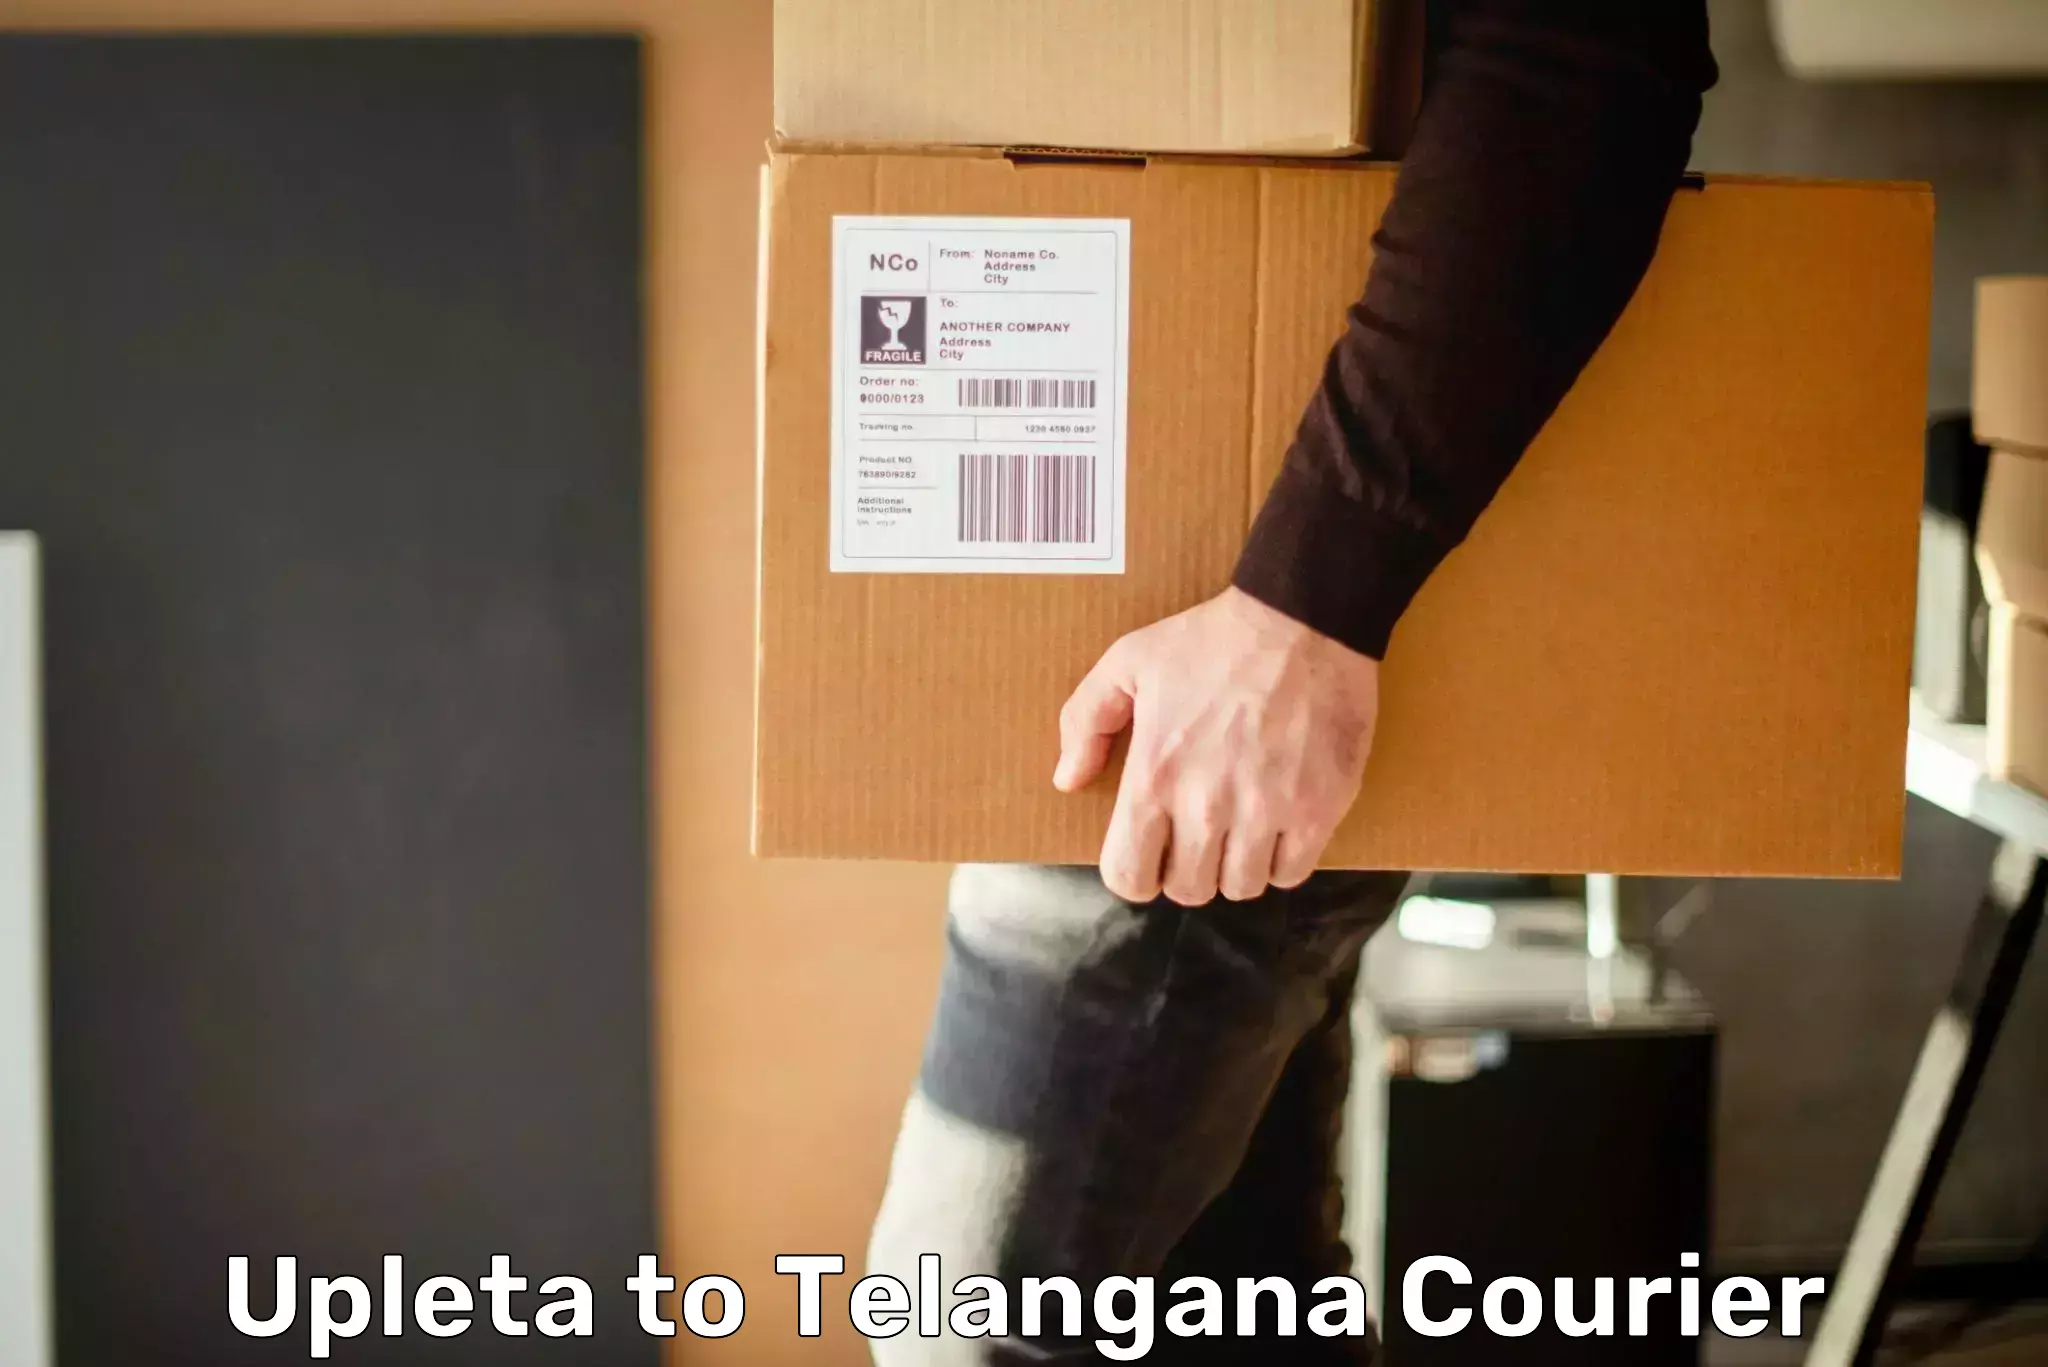 Express courier capabilities Upleta to Telangana